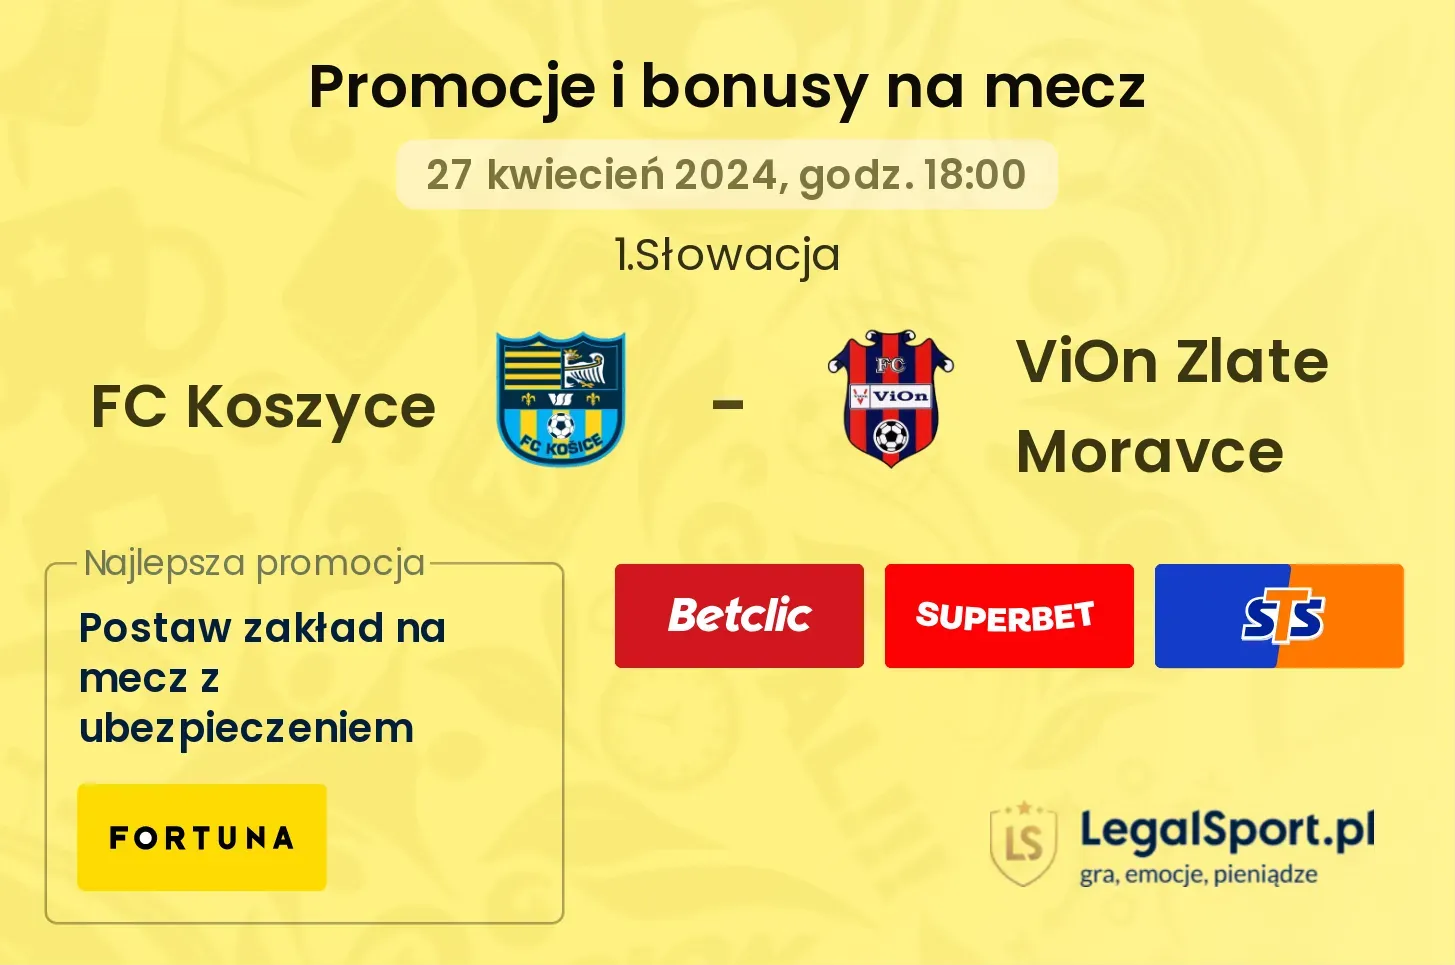 FC Koszyce - ViOn Zlate Moravce promocje bonusy na mecz